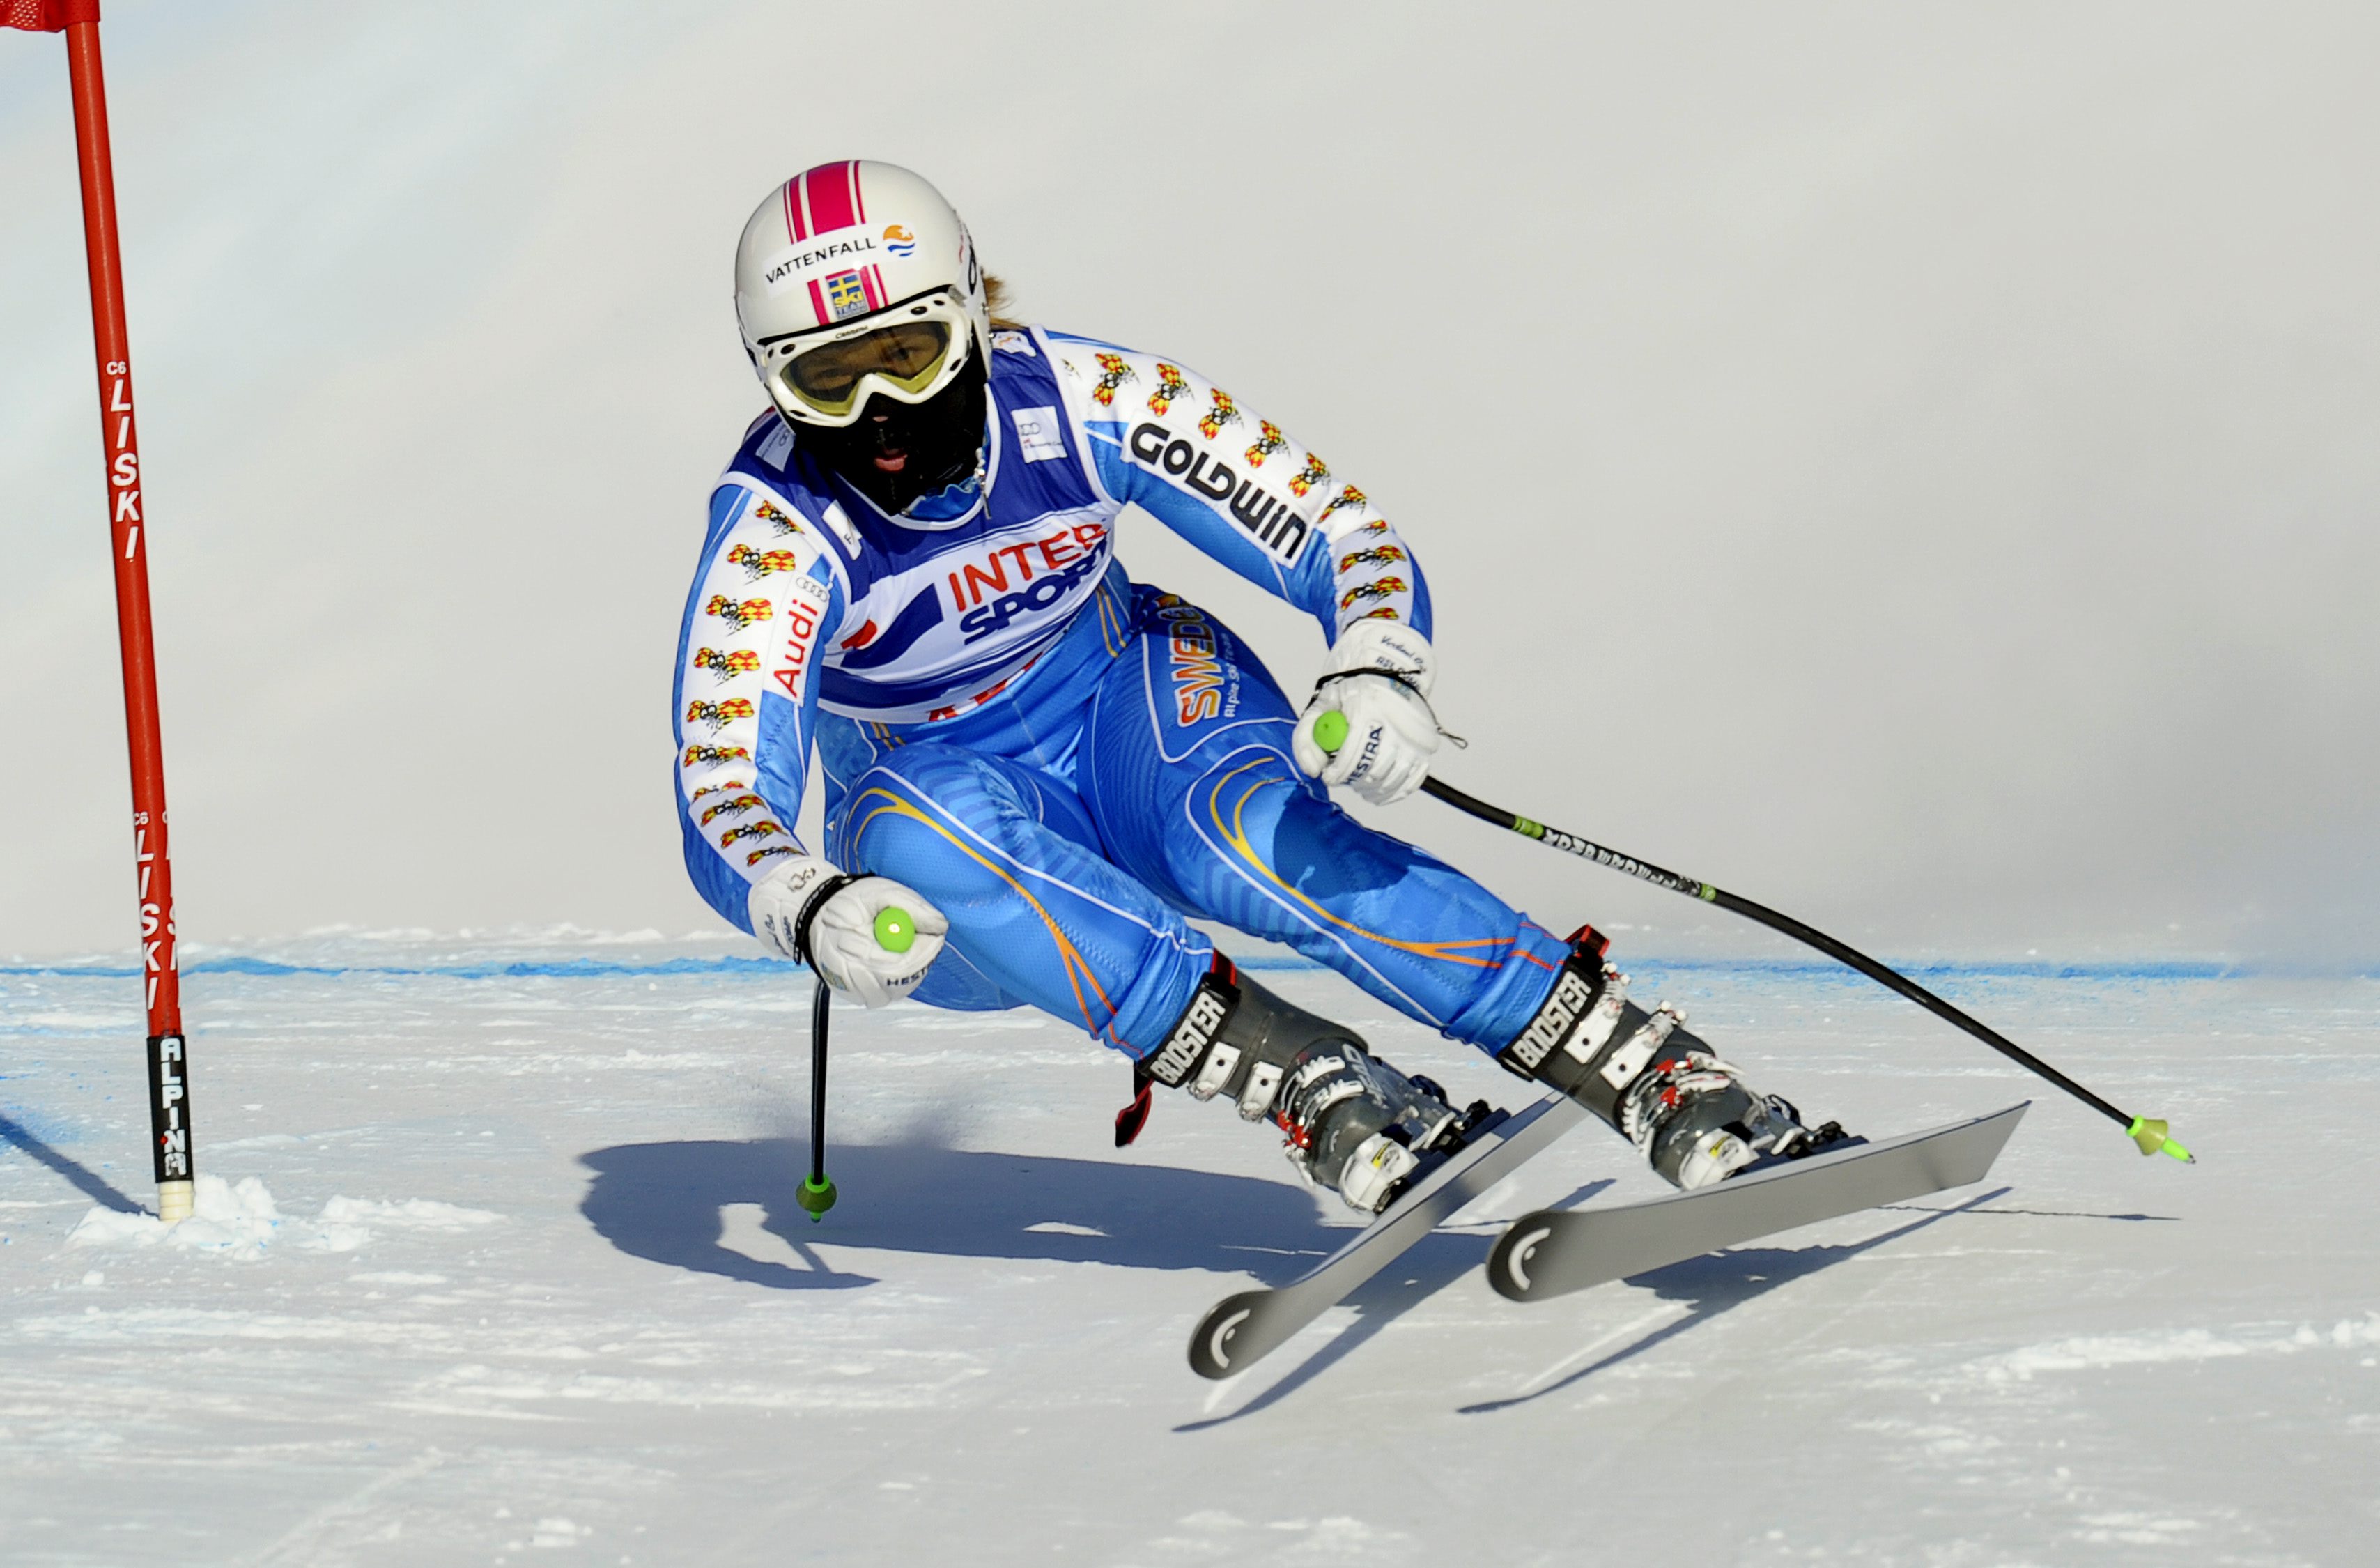 Anja Parson, Stortlopp, skidor, Alpint, Slalom